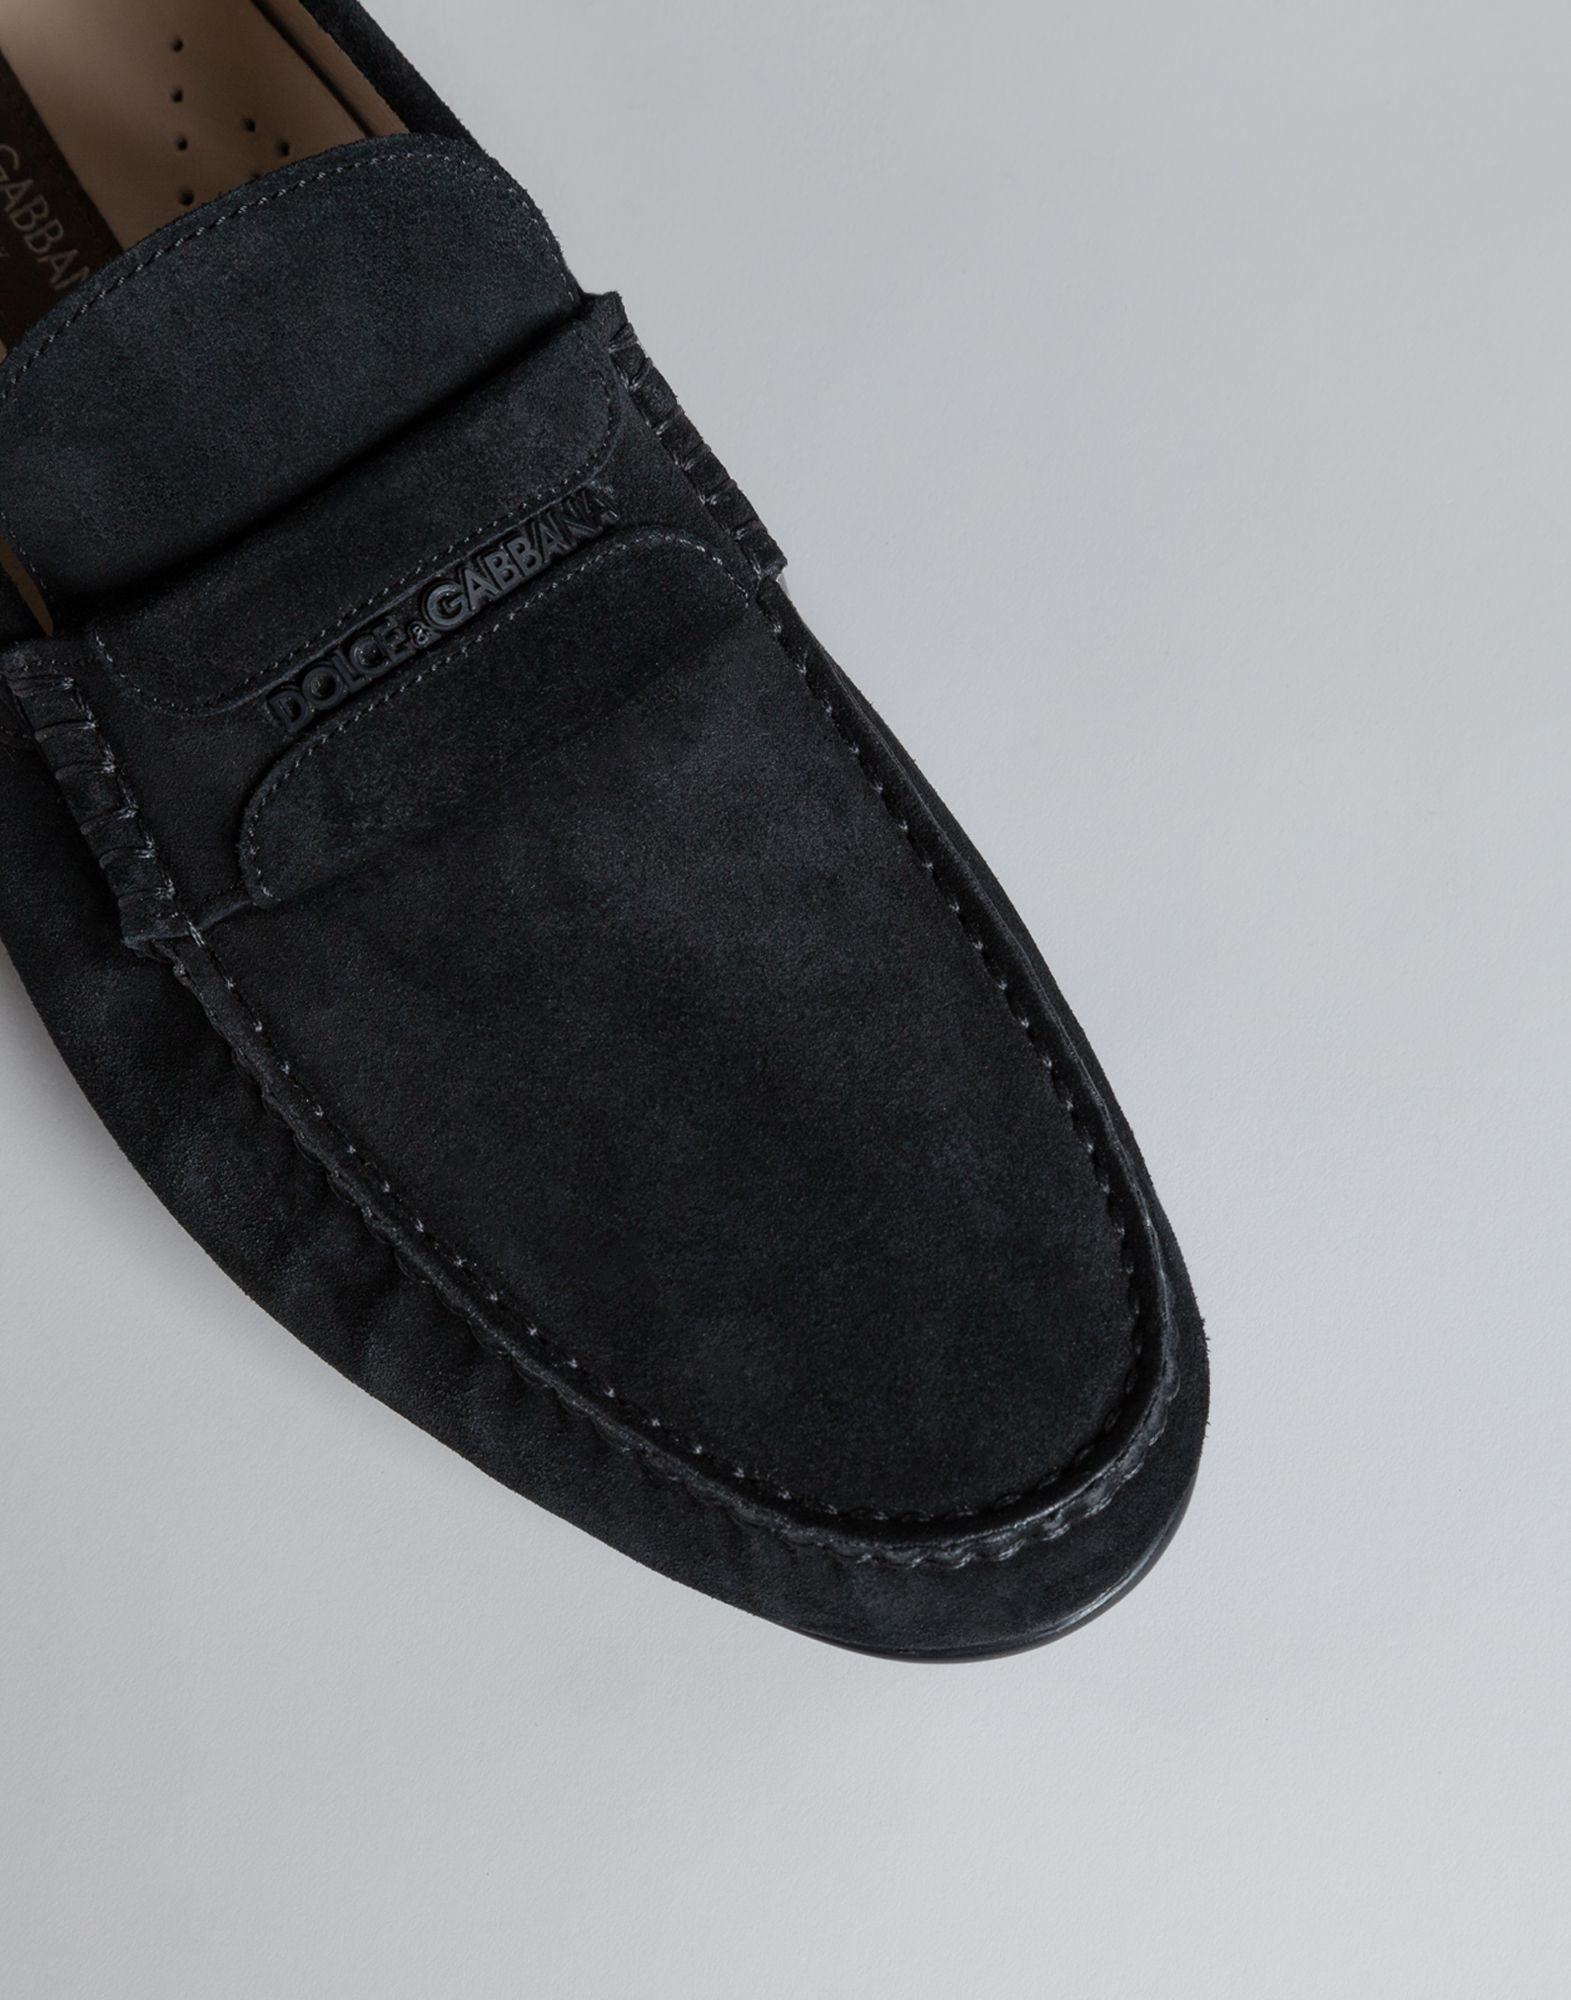 Lyst - Dolce & Gabbana Suede Calfskin Driving Shoe in Black for Men